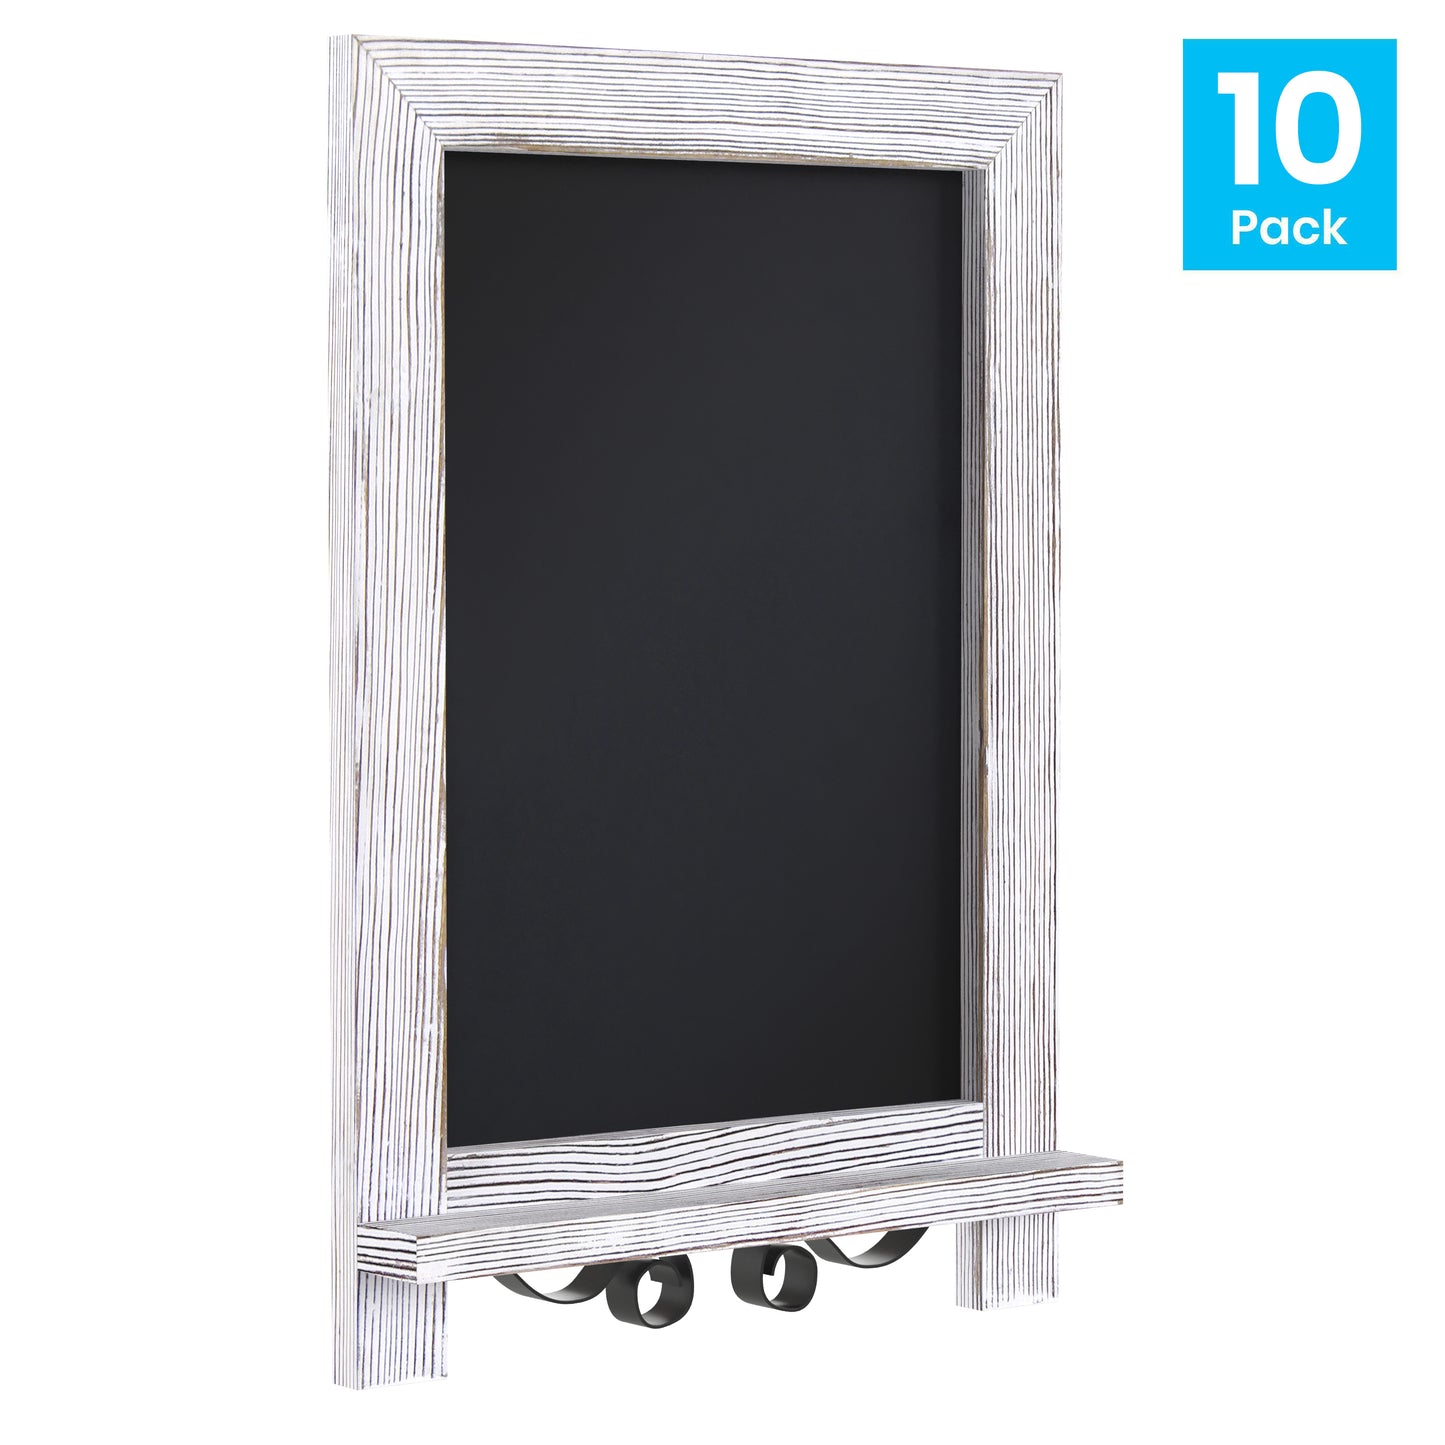 10PK Whitewash Chalkboards 10-HFKHD-GDIS-CRE8-022315-GG